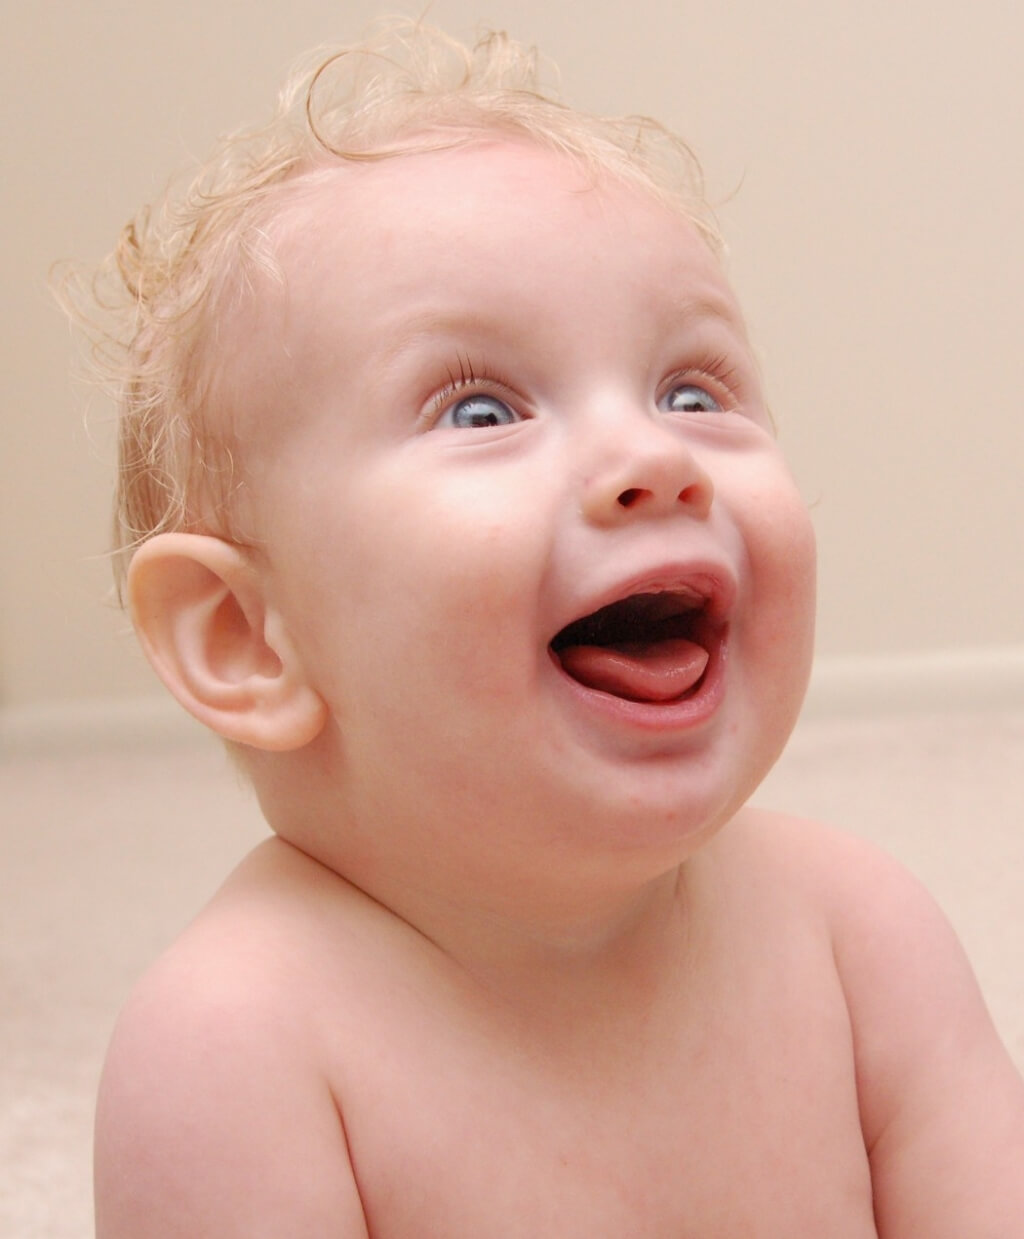 Higiene bucal é fundamental em bebês